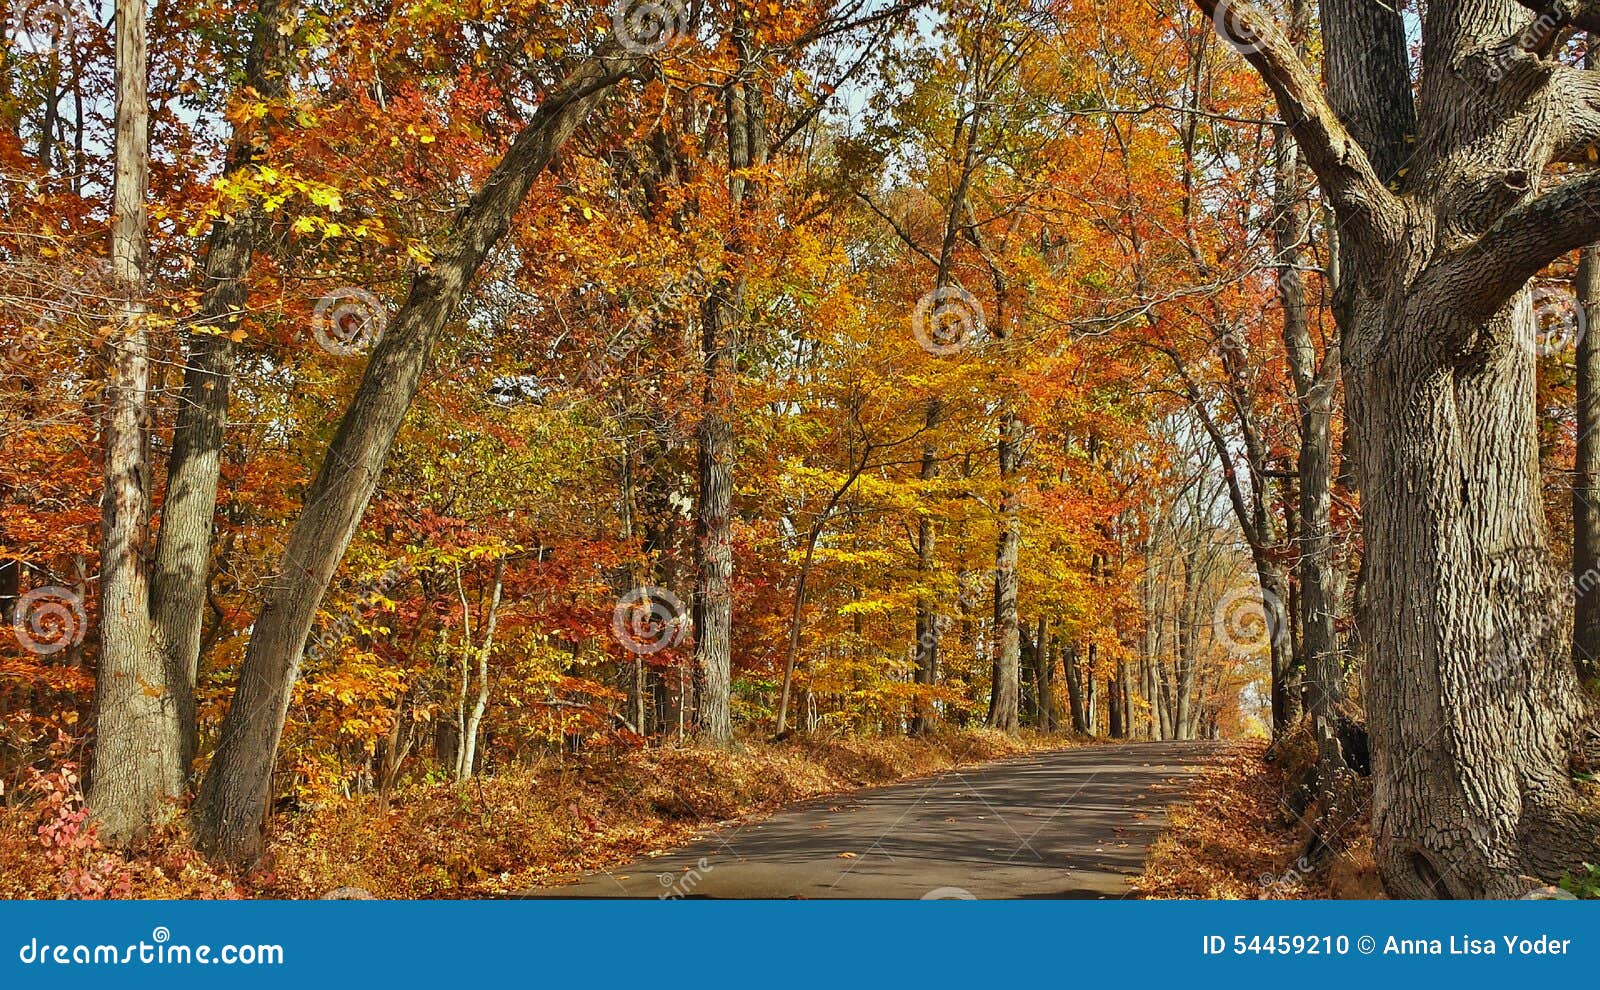 fall scenic byway in bucks county, pennsylvania